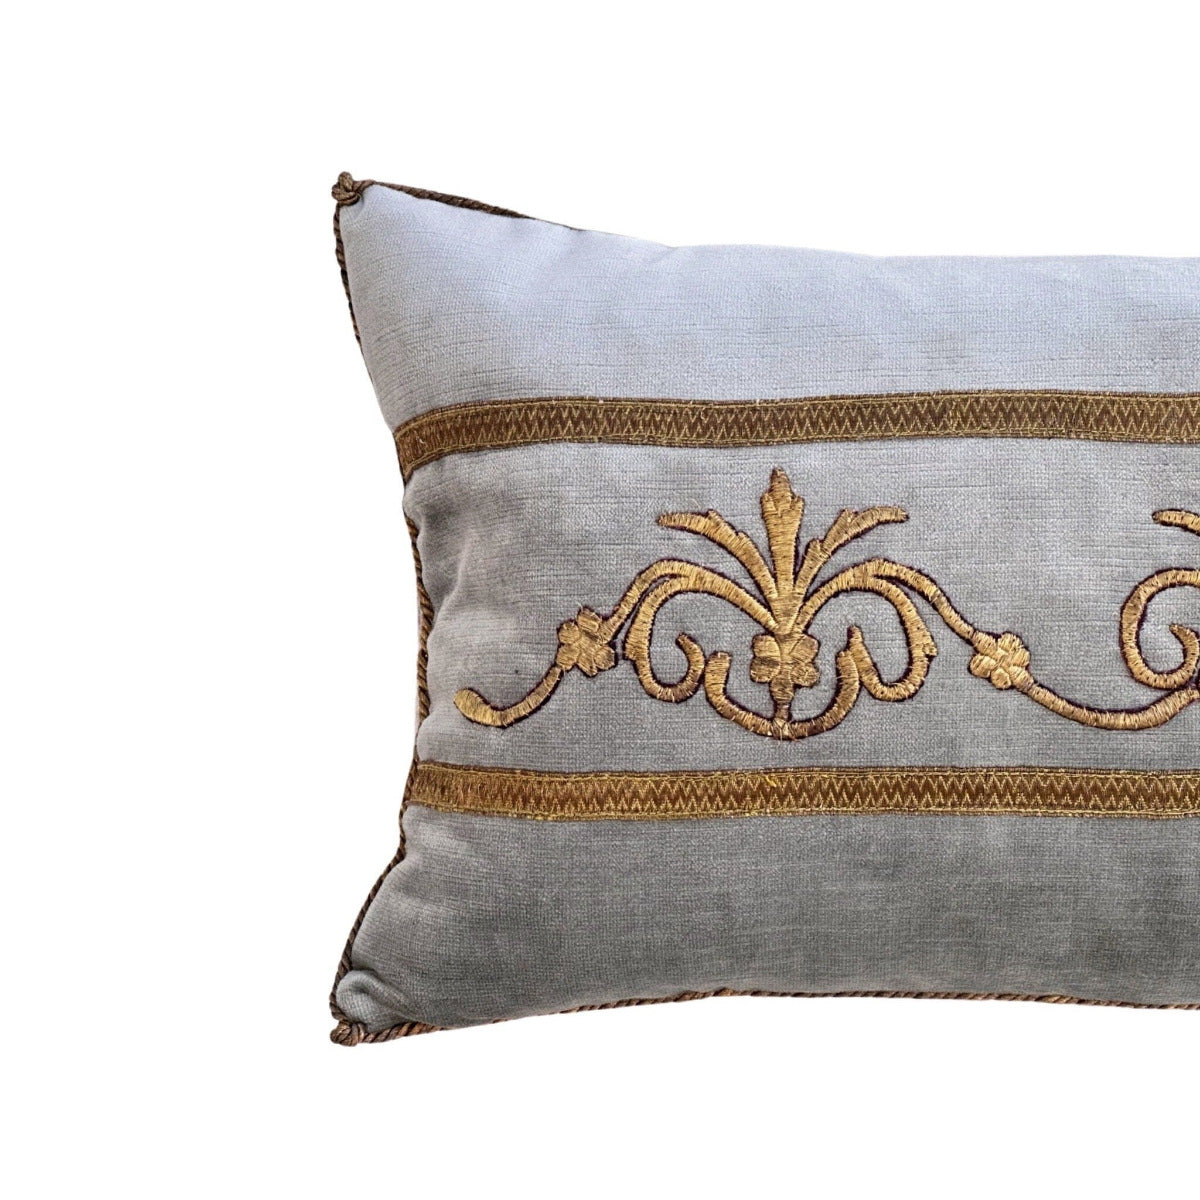 Antique Ottoman Empire Raised Gold Metallic Embroidery (#E021123 | 12 x 23') New Pillows B. Viz Design 